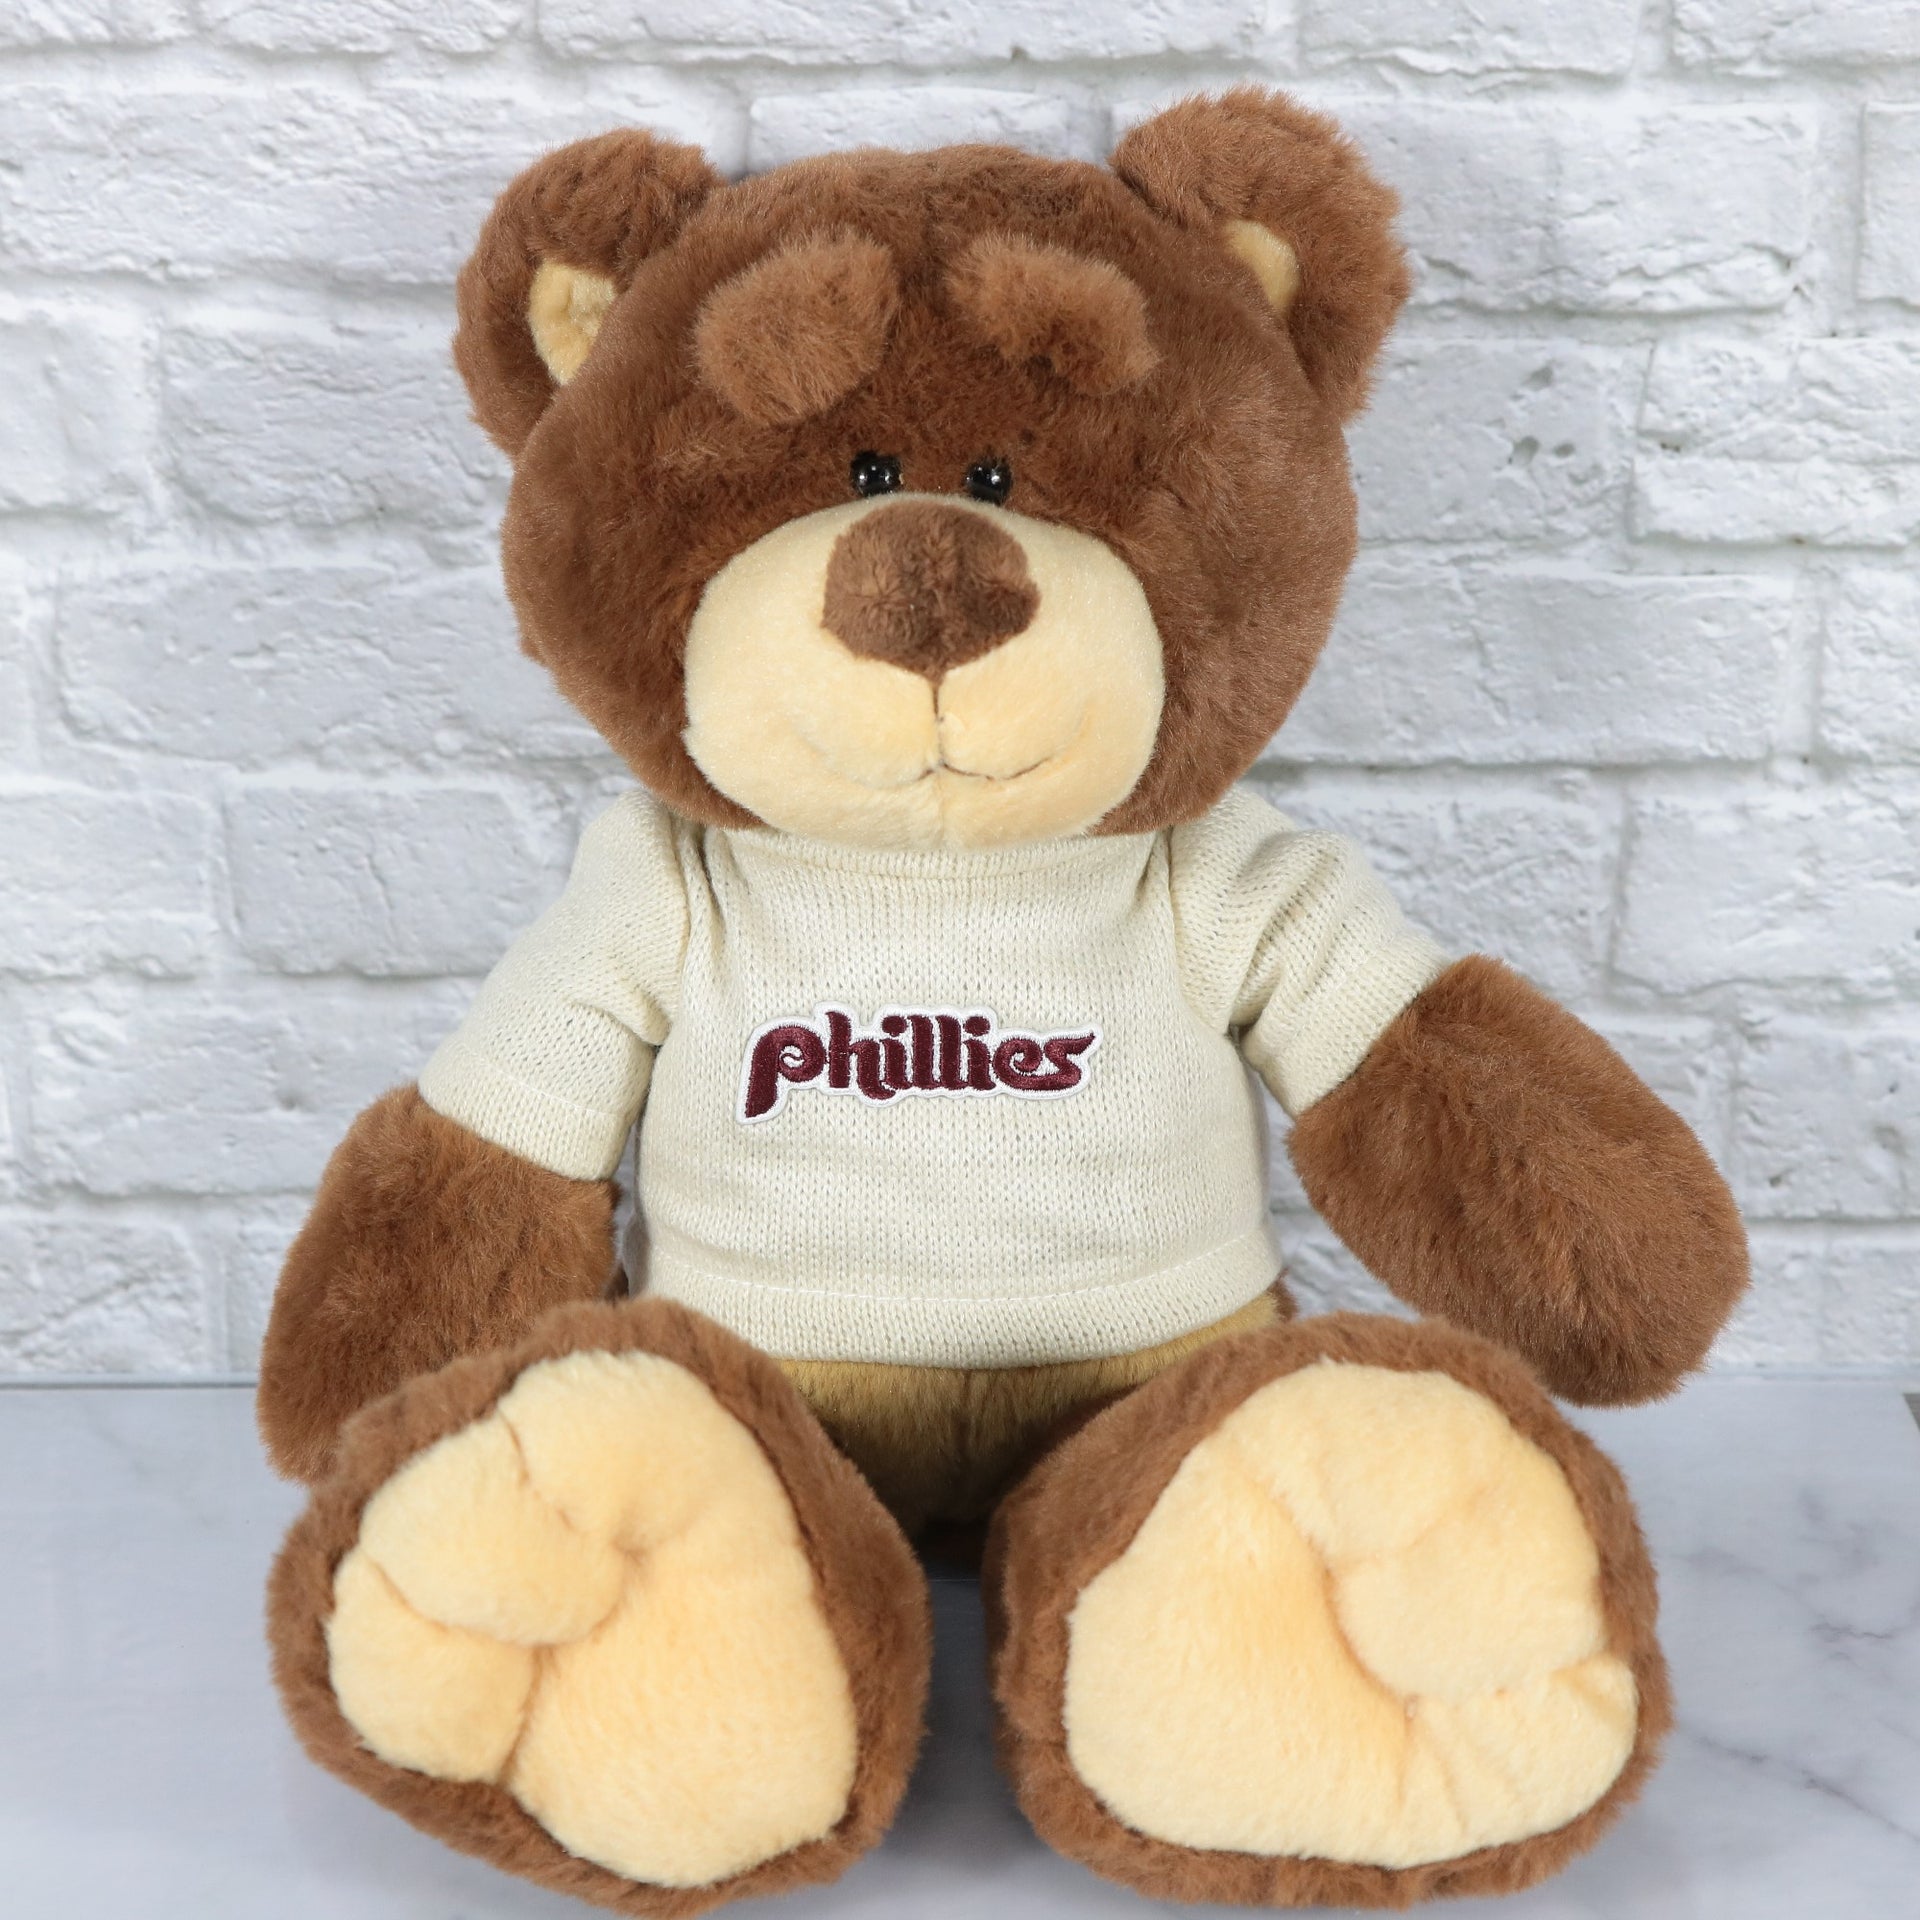 Philadelphia Phillies Fuzzy Wuzzy "Phillies" Cooperstown wordmark Cream Sweater | Dark Brown Teddy Bear